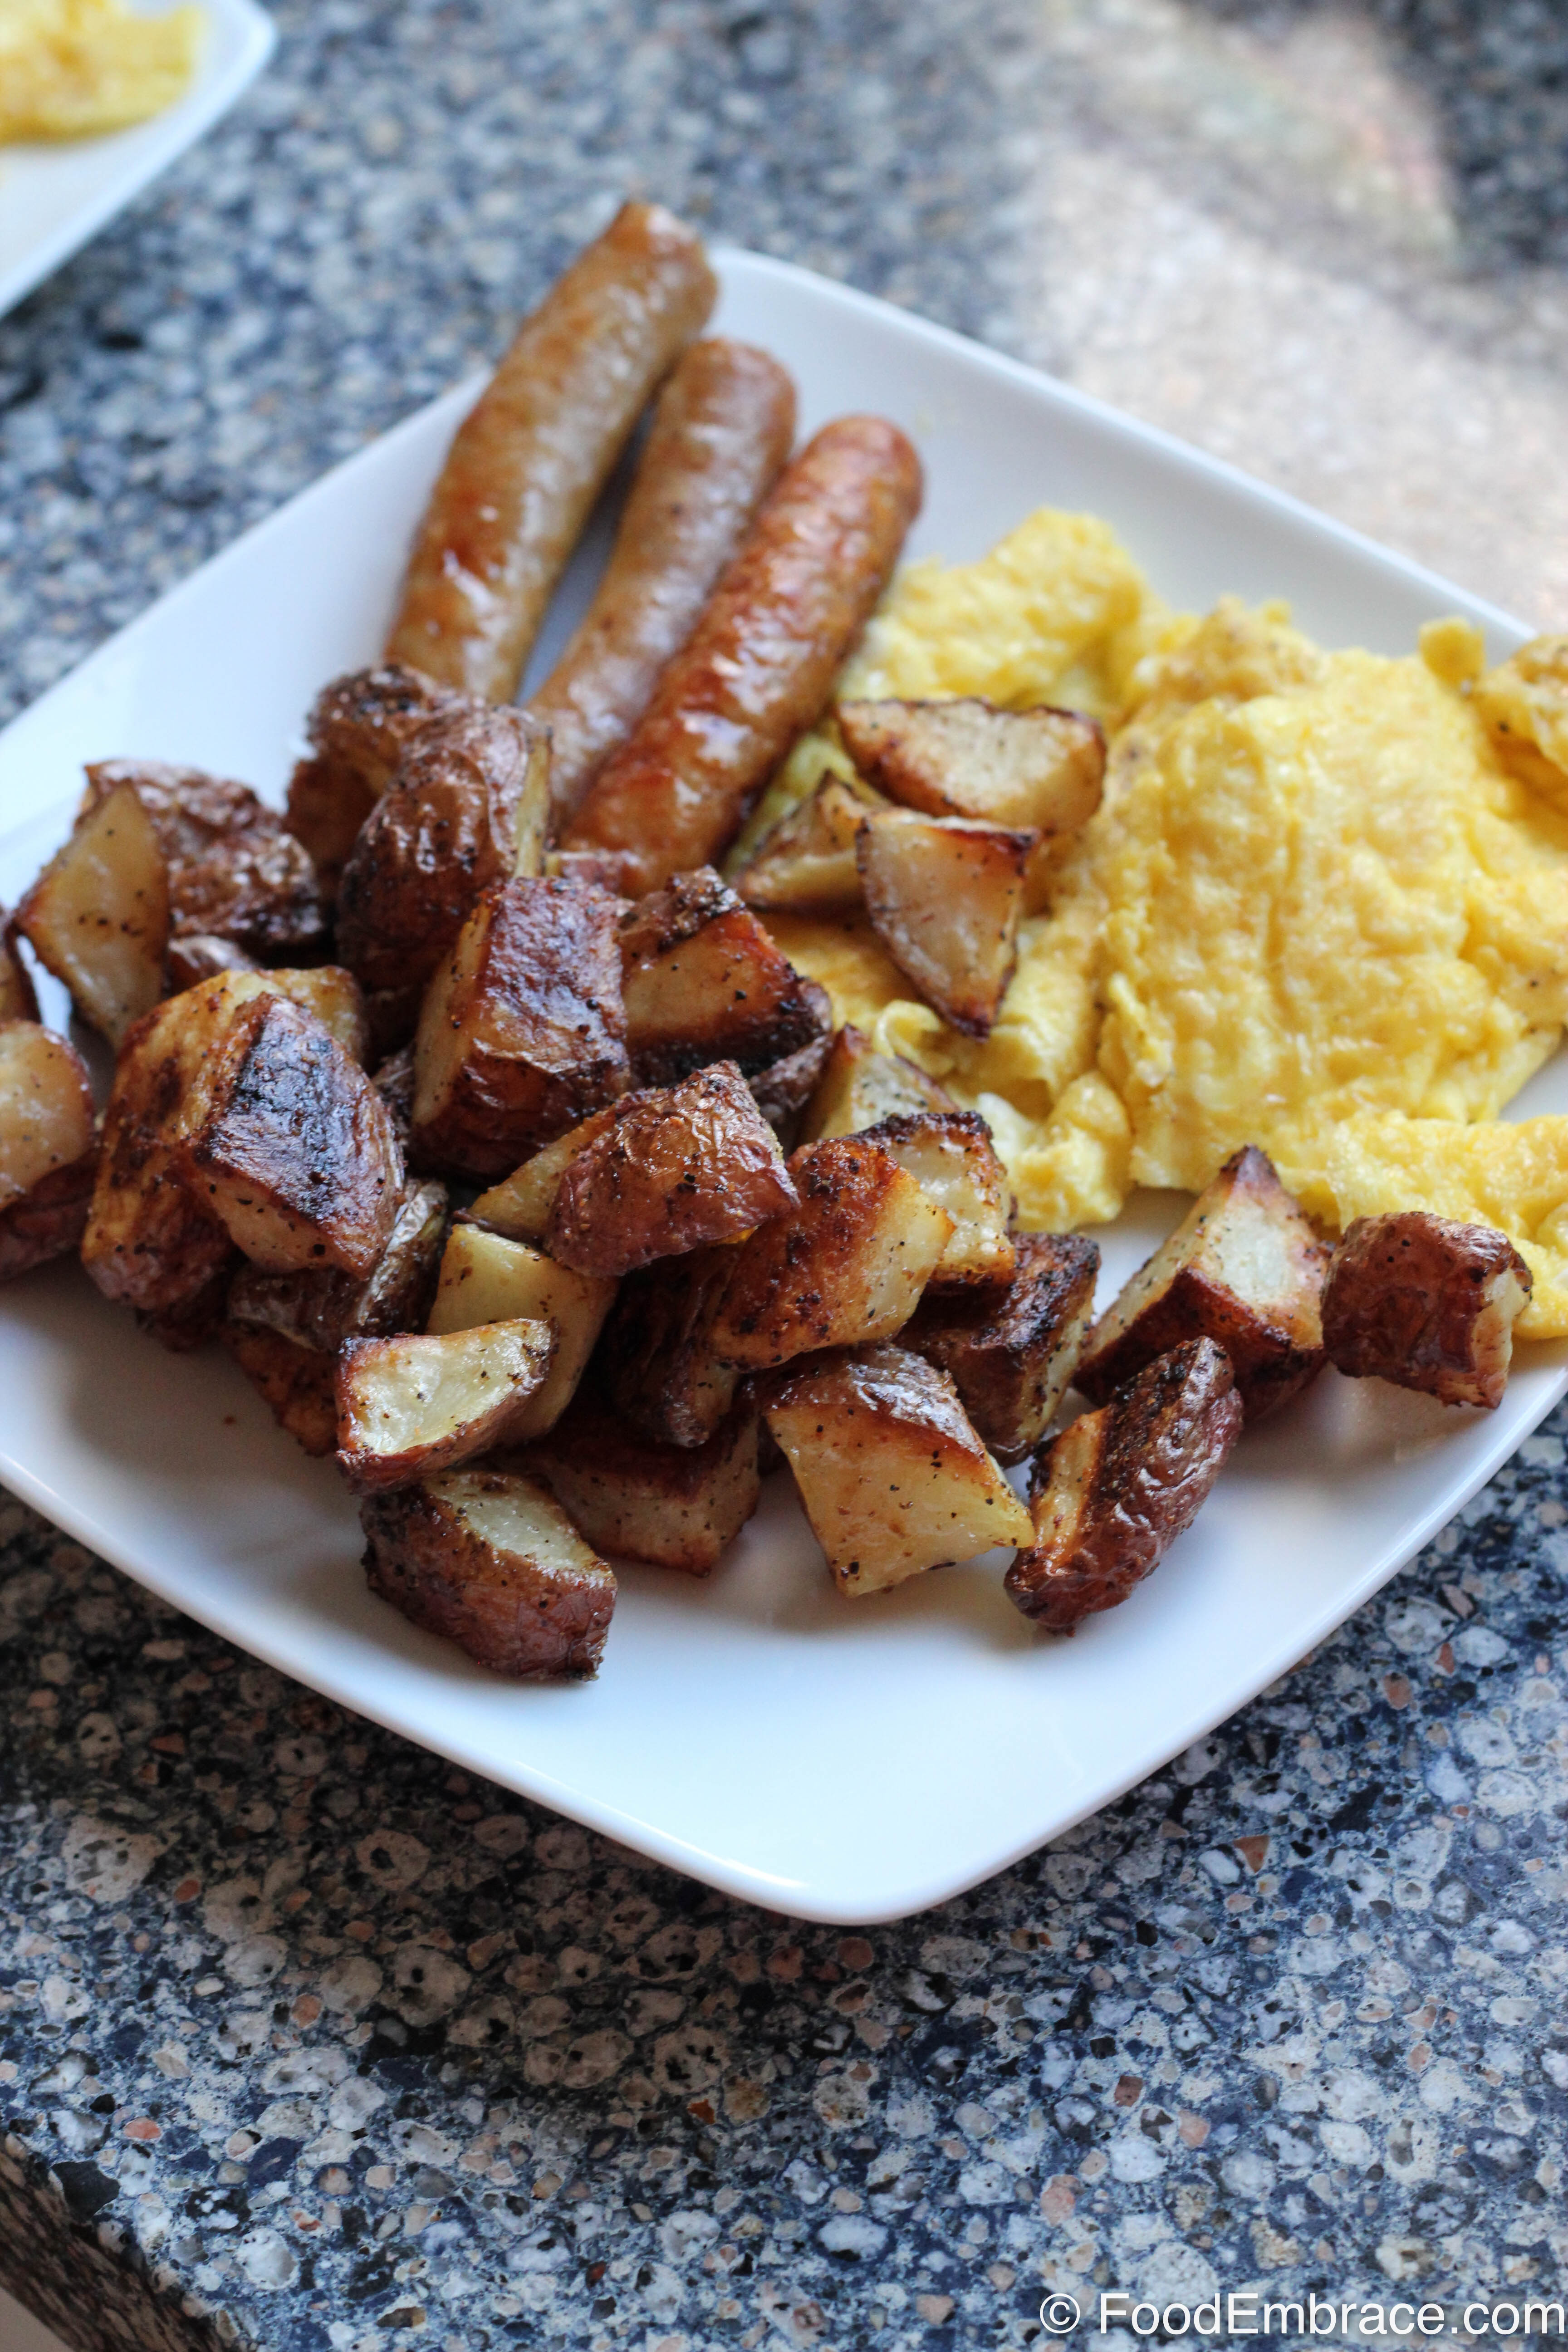 Eggs, potatoes, and sausage